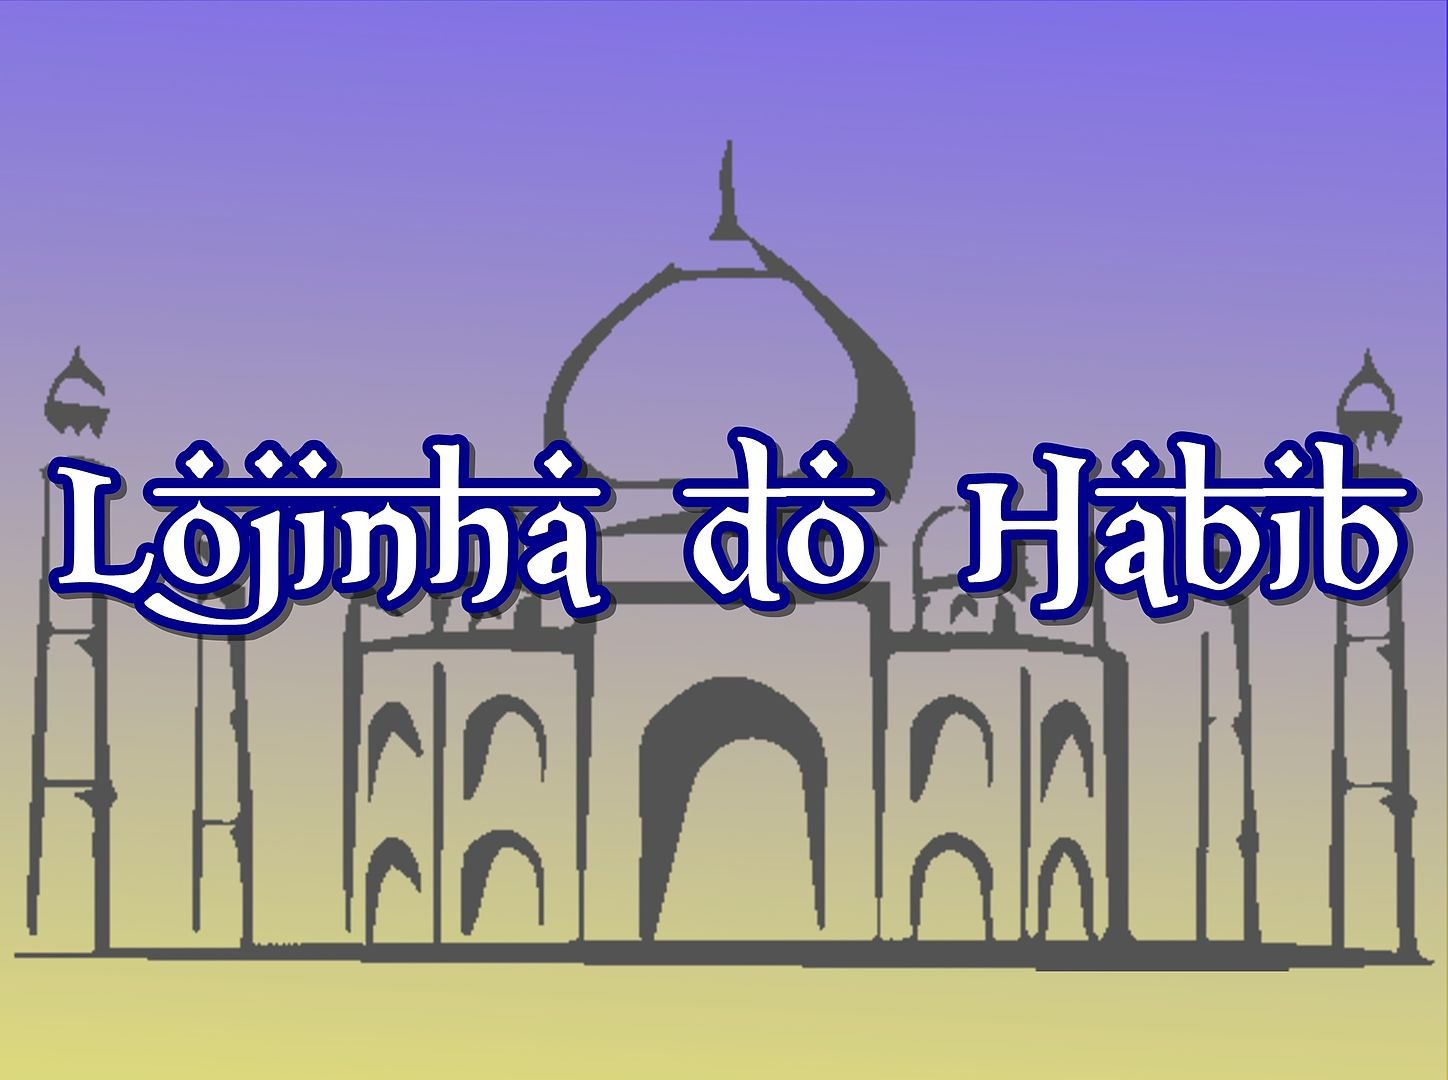 LOJINHA DO HABIB